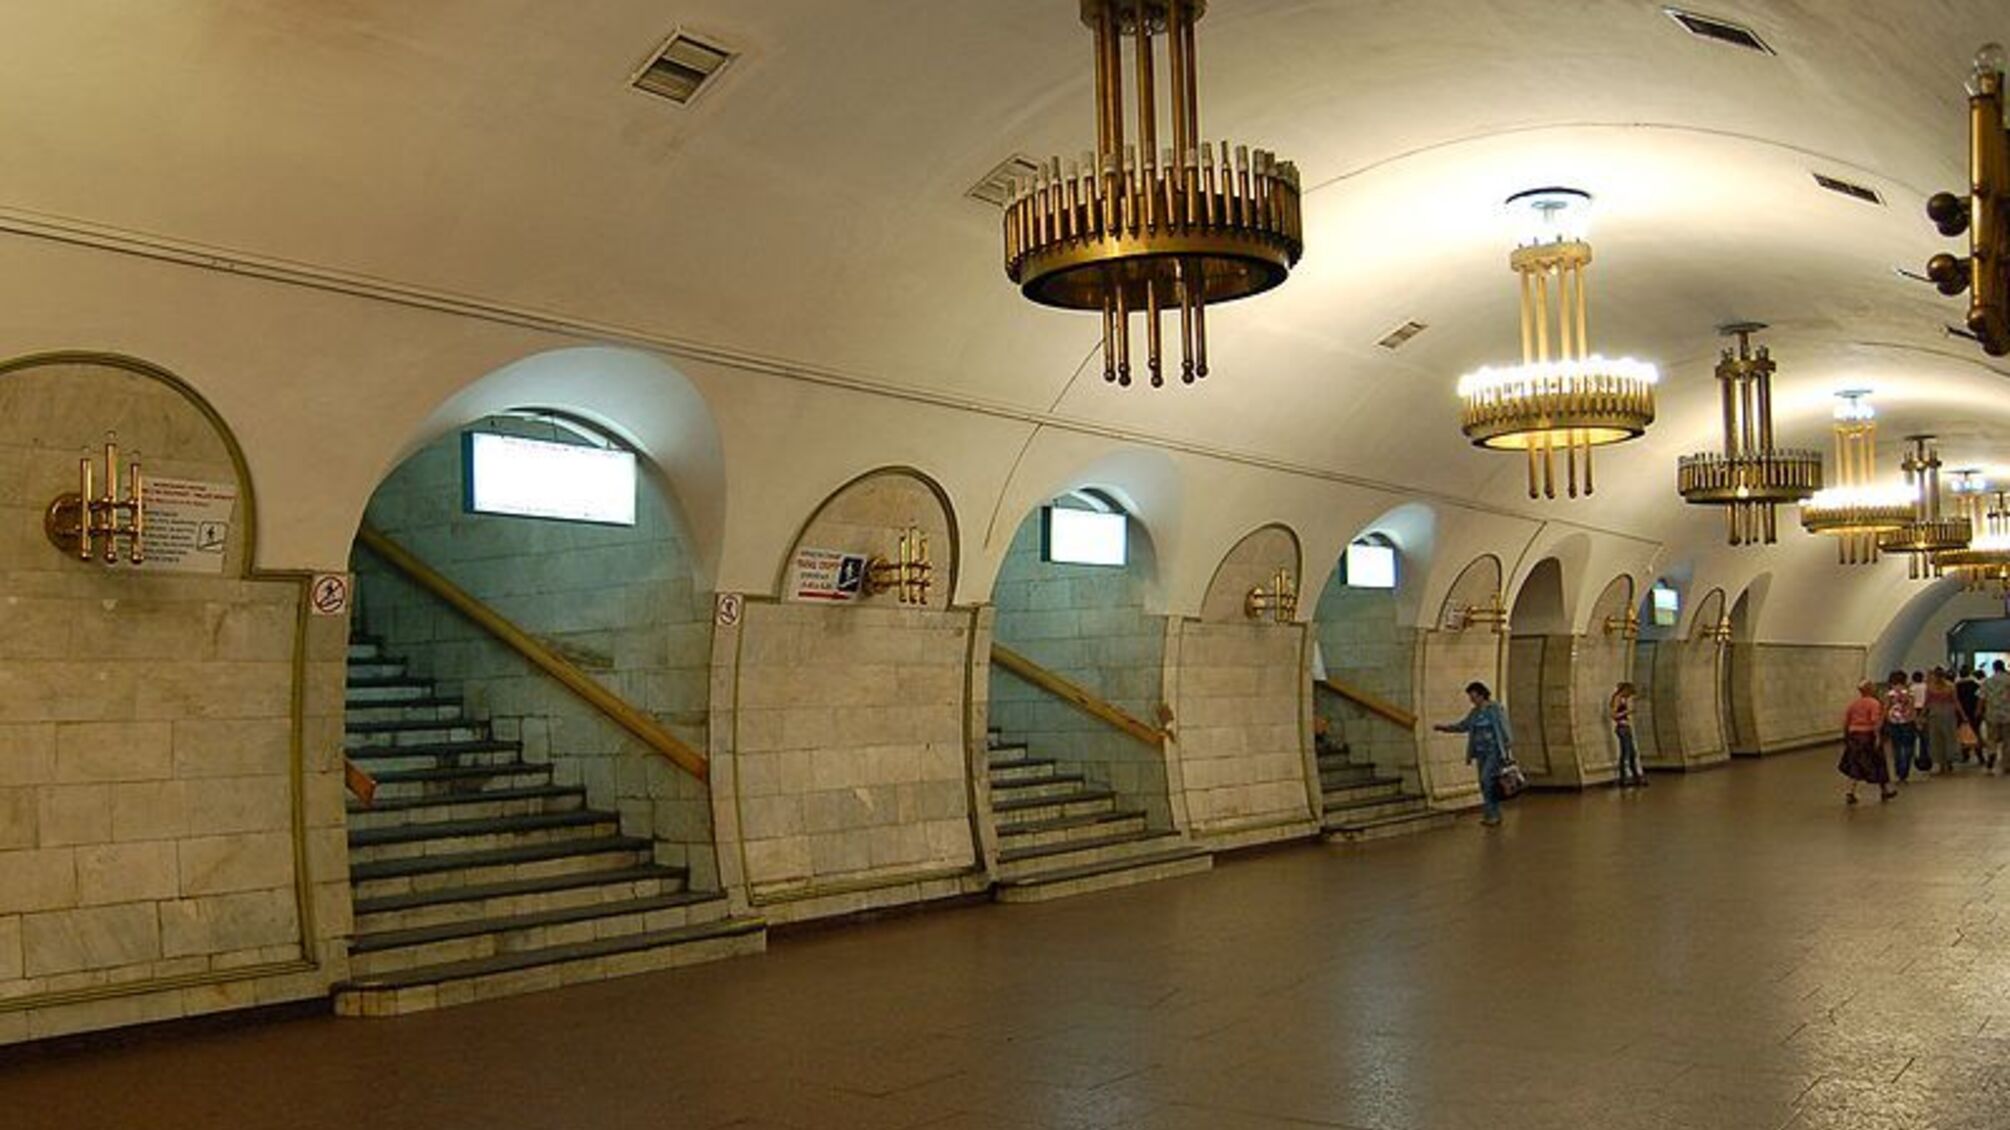 станция метро Площадь Льва Толстого дым